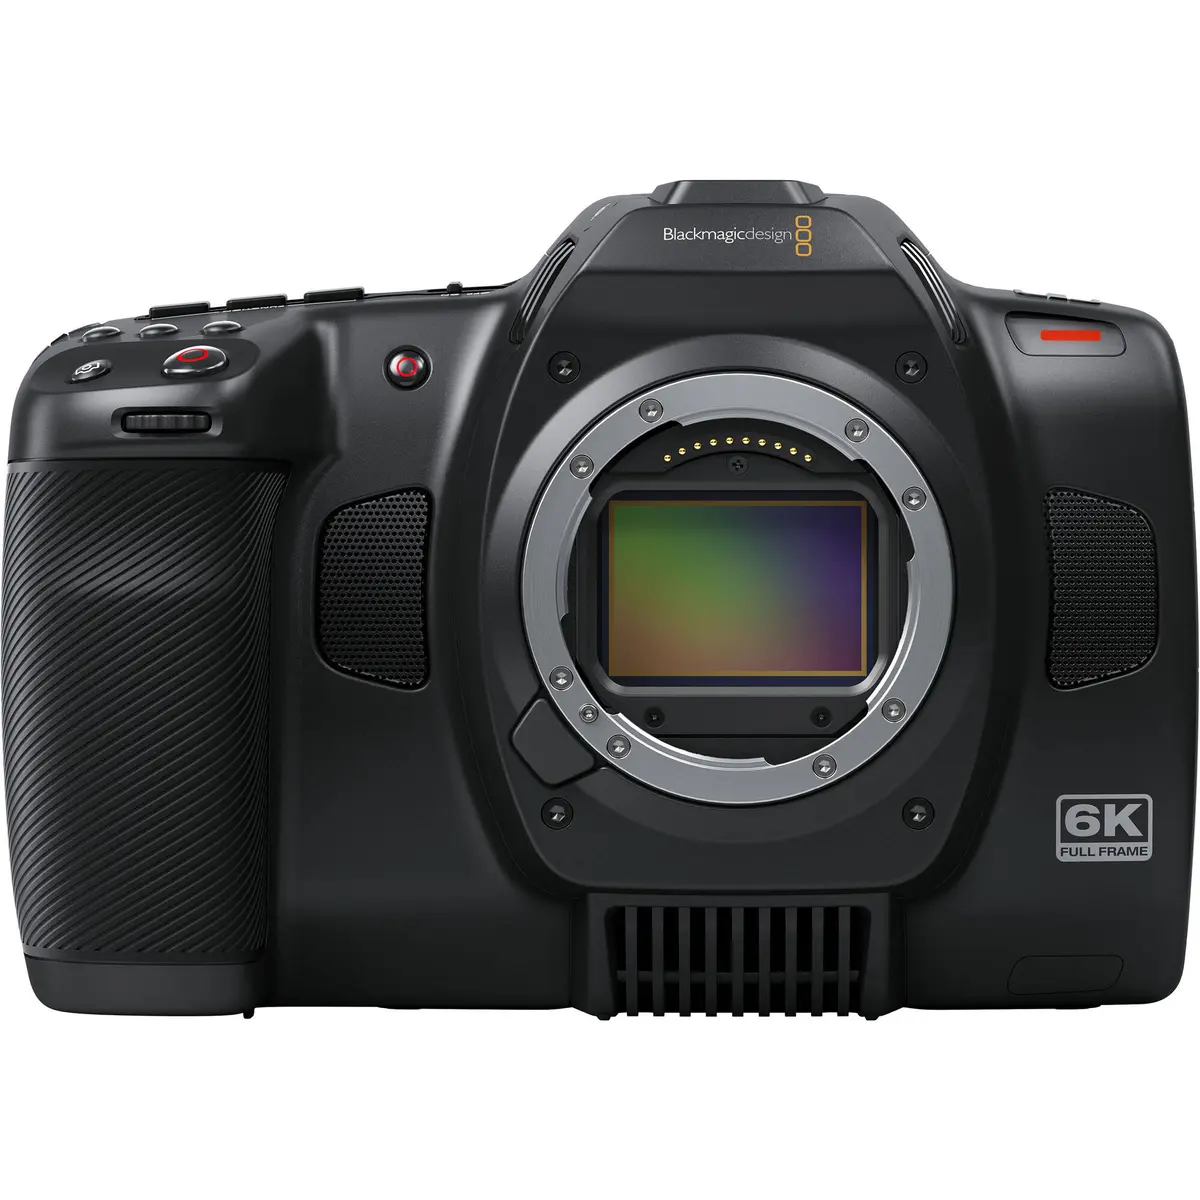 1. Blackmagic Design Cinema Camera 6K (Leica L)